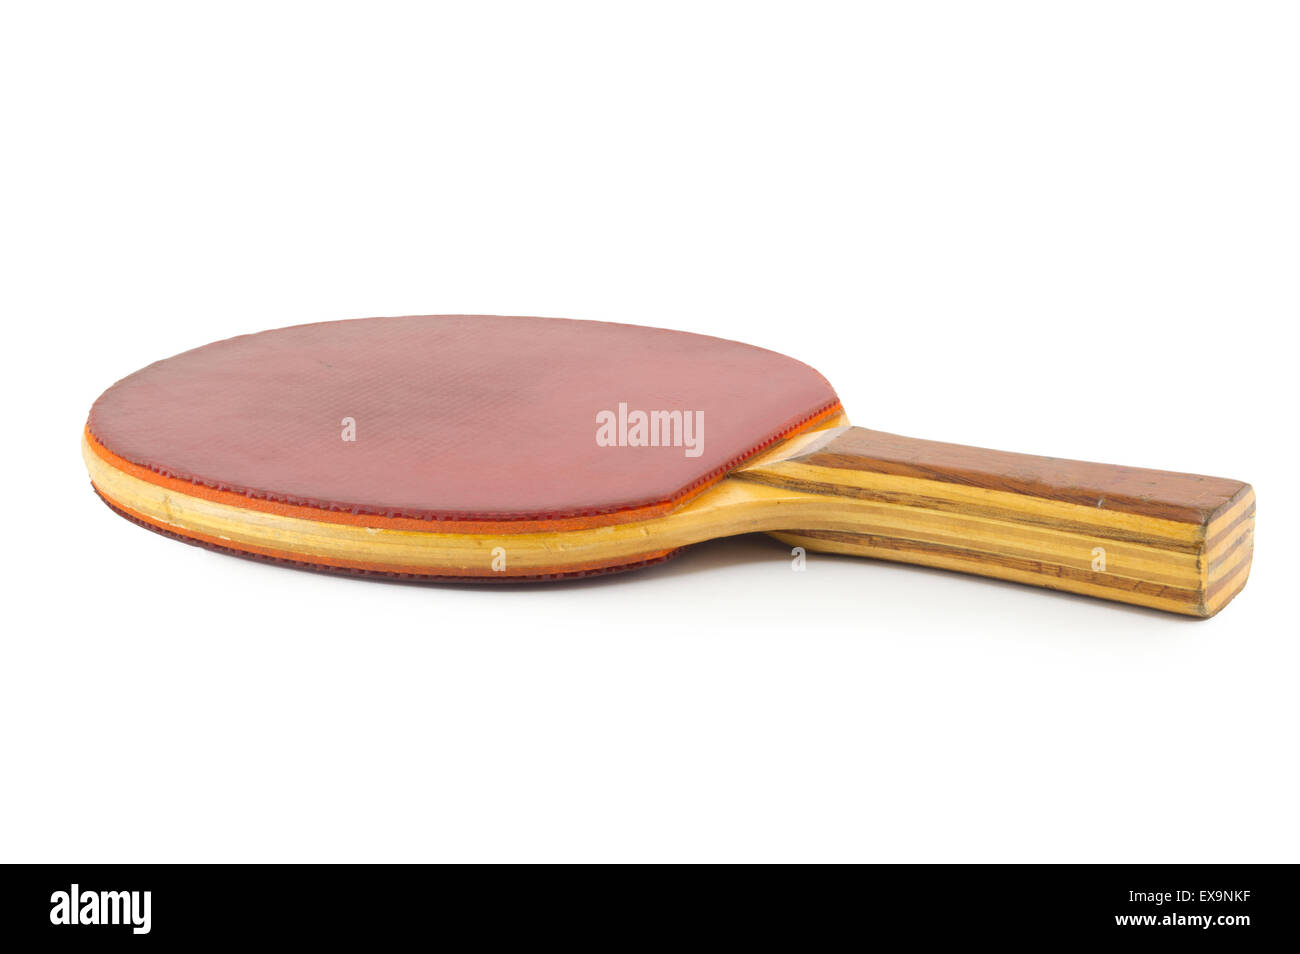 Casco profesional de raqueta de tenis de mesa rojo aislado en blanco Foto de stock